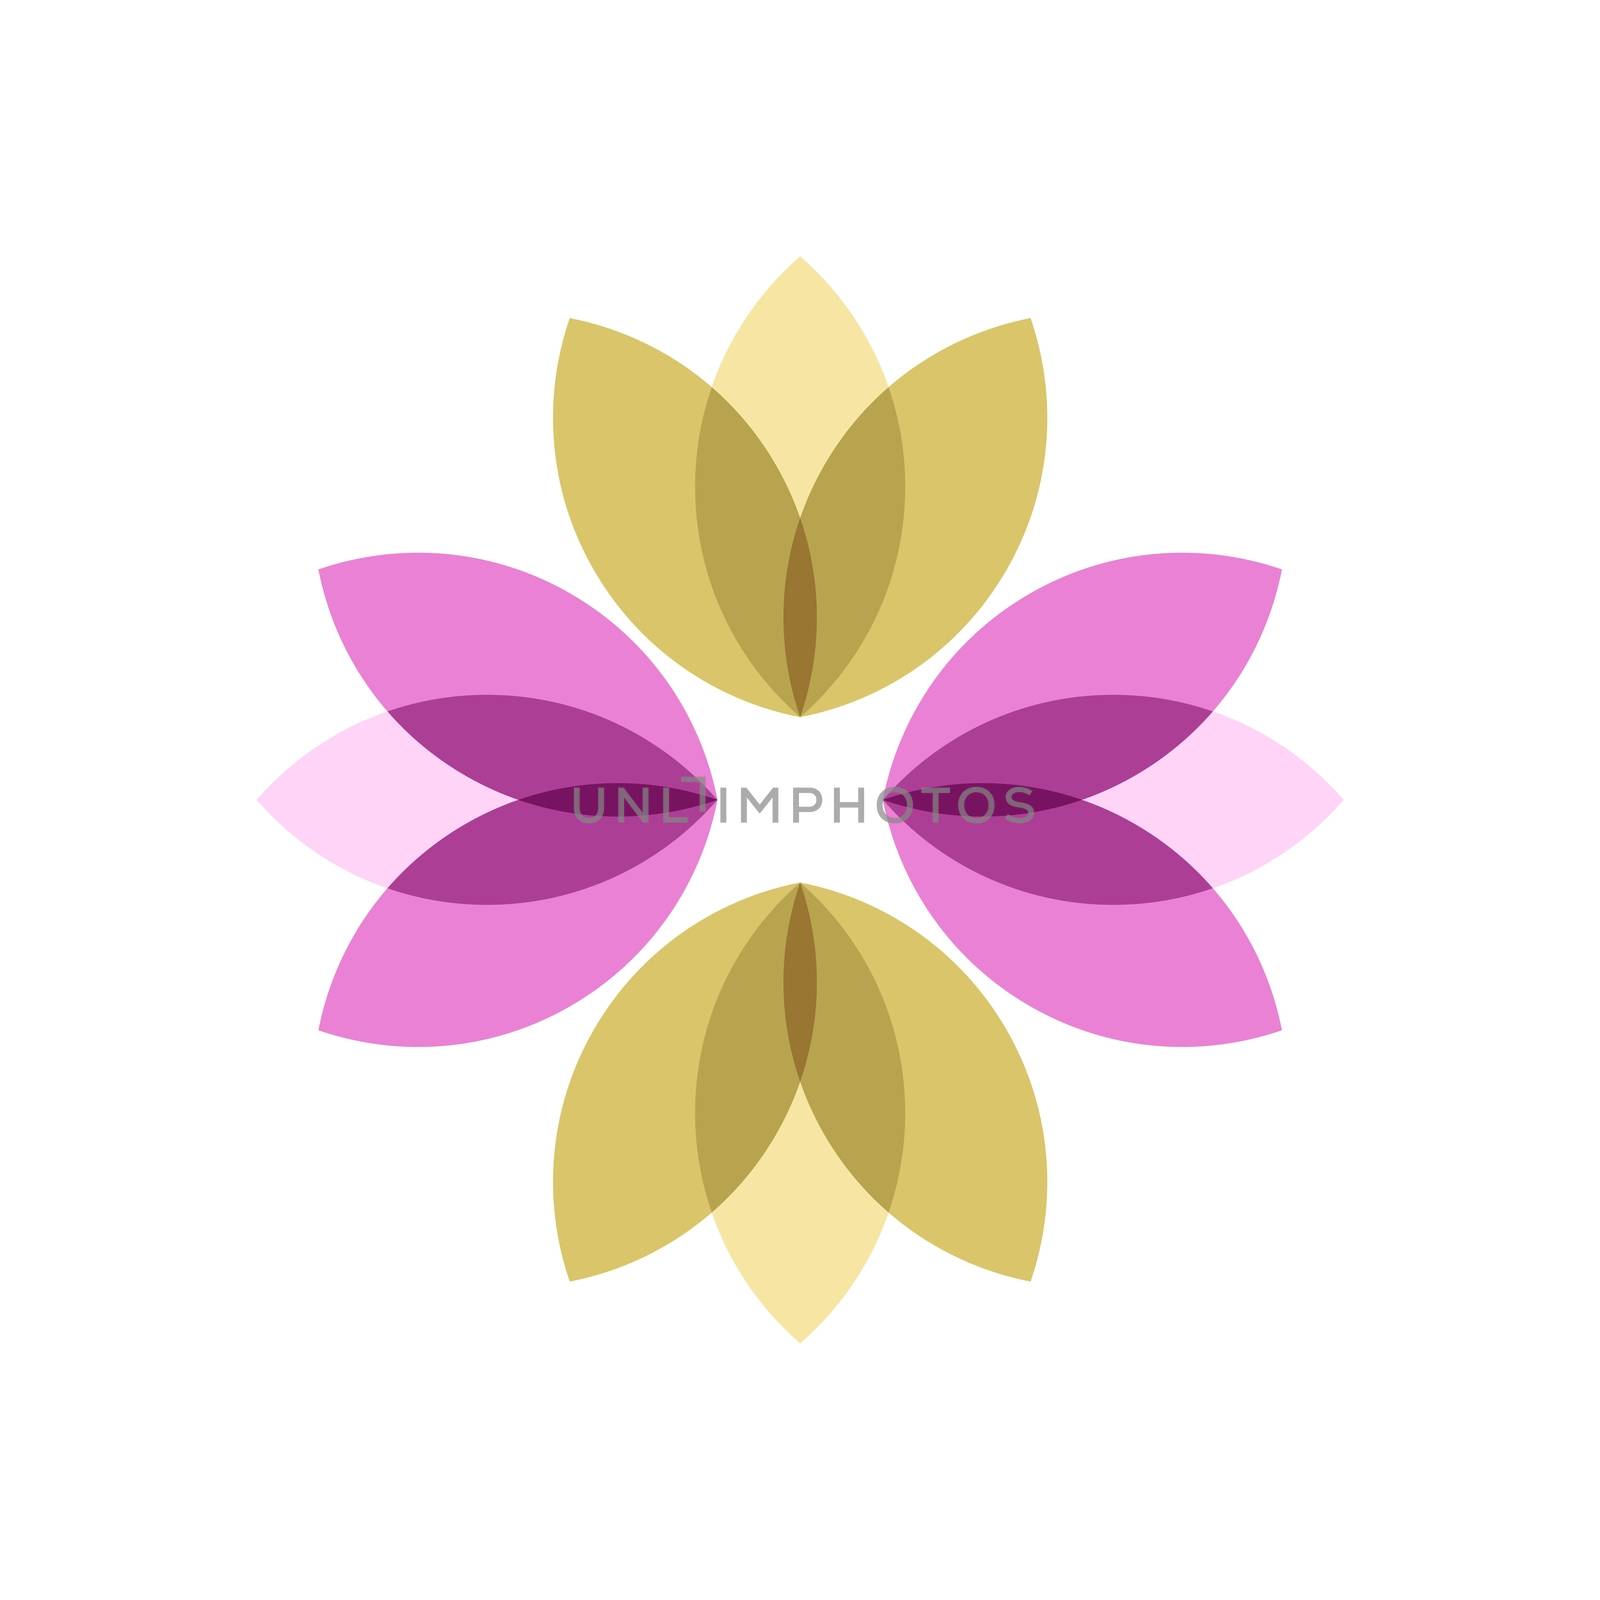 Colorful Ornamental Flower vector logo template Illustration Design. Vector EPS 10.